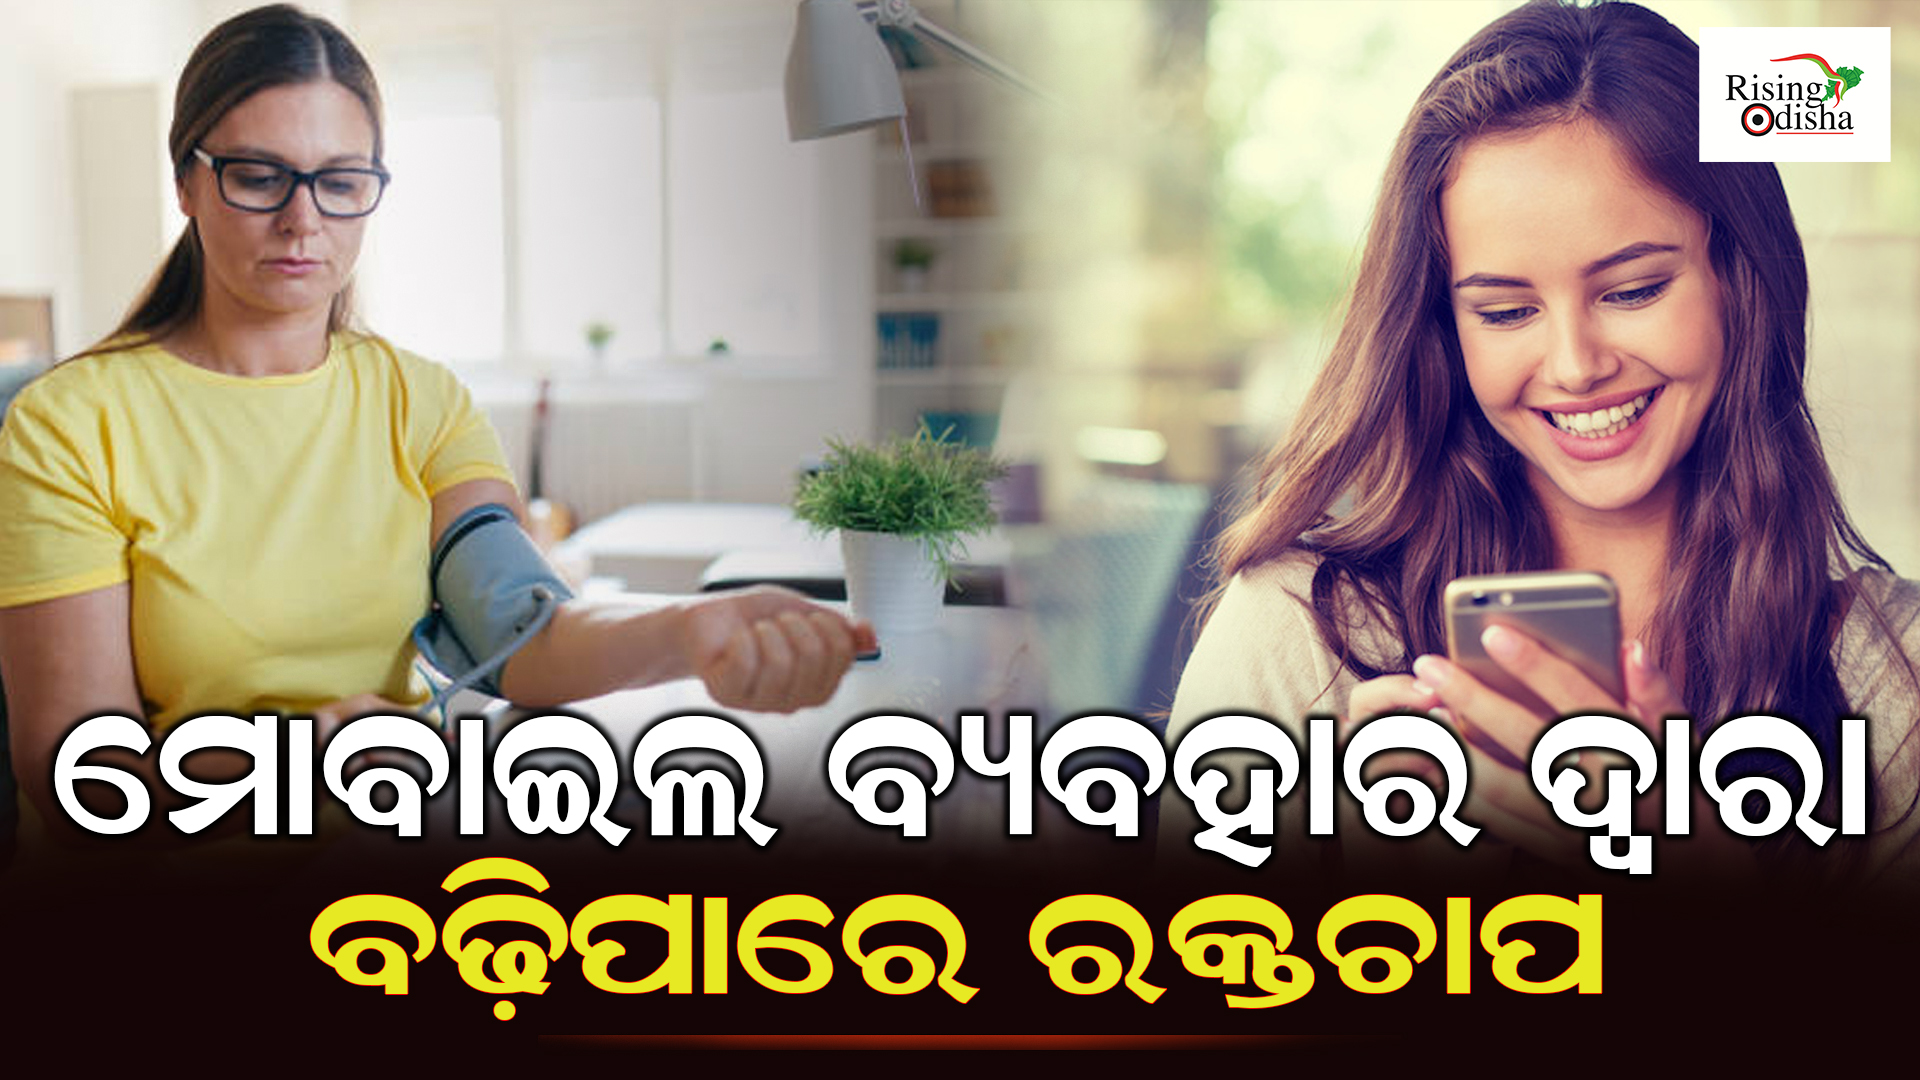 mobile phone use side effects, mobile phone usage side effects, mobile phone effects on human body, odia blog, rising odisha